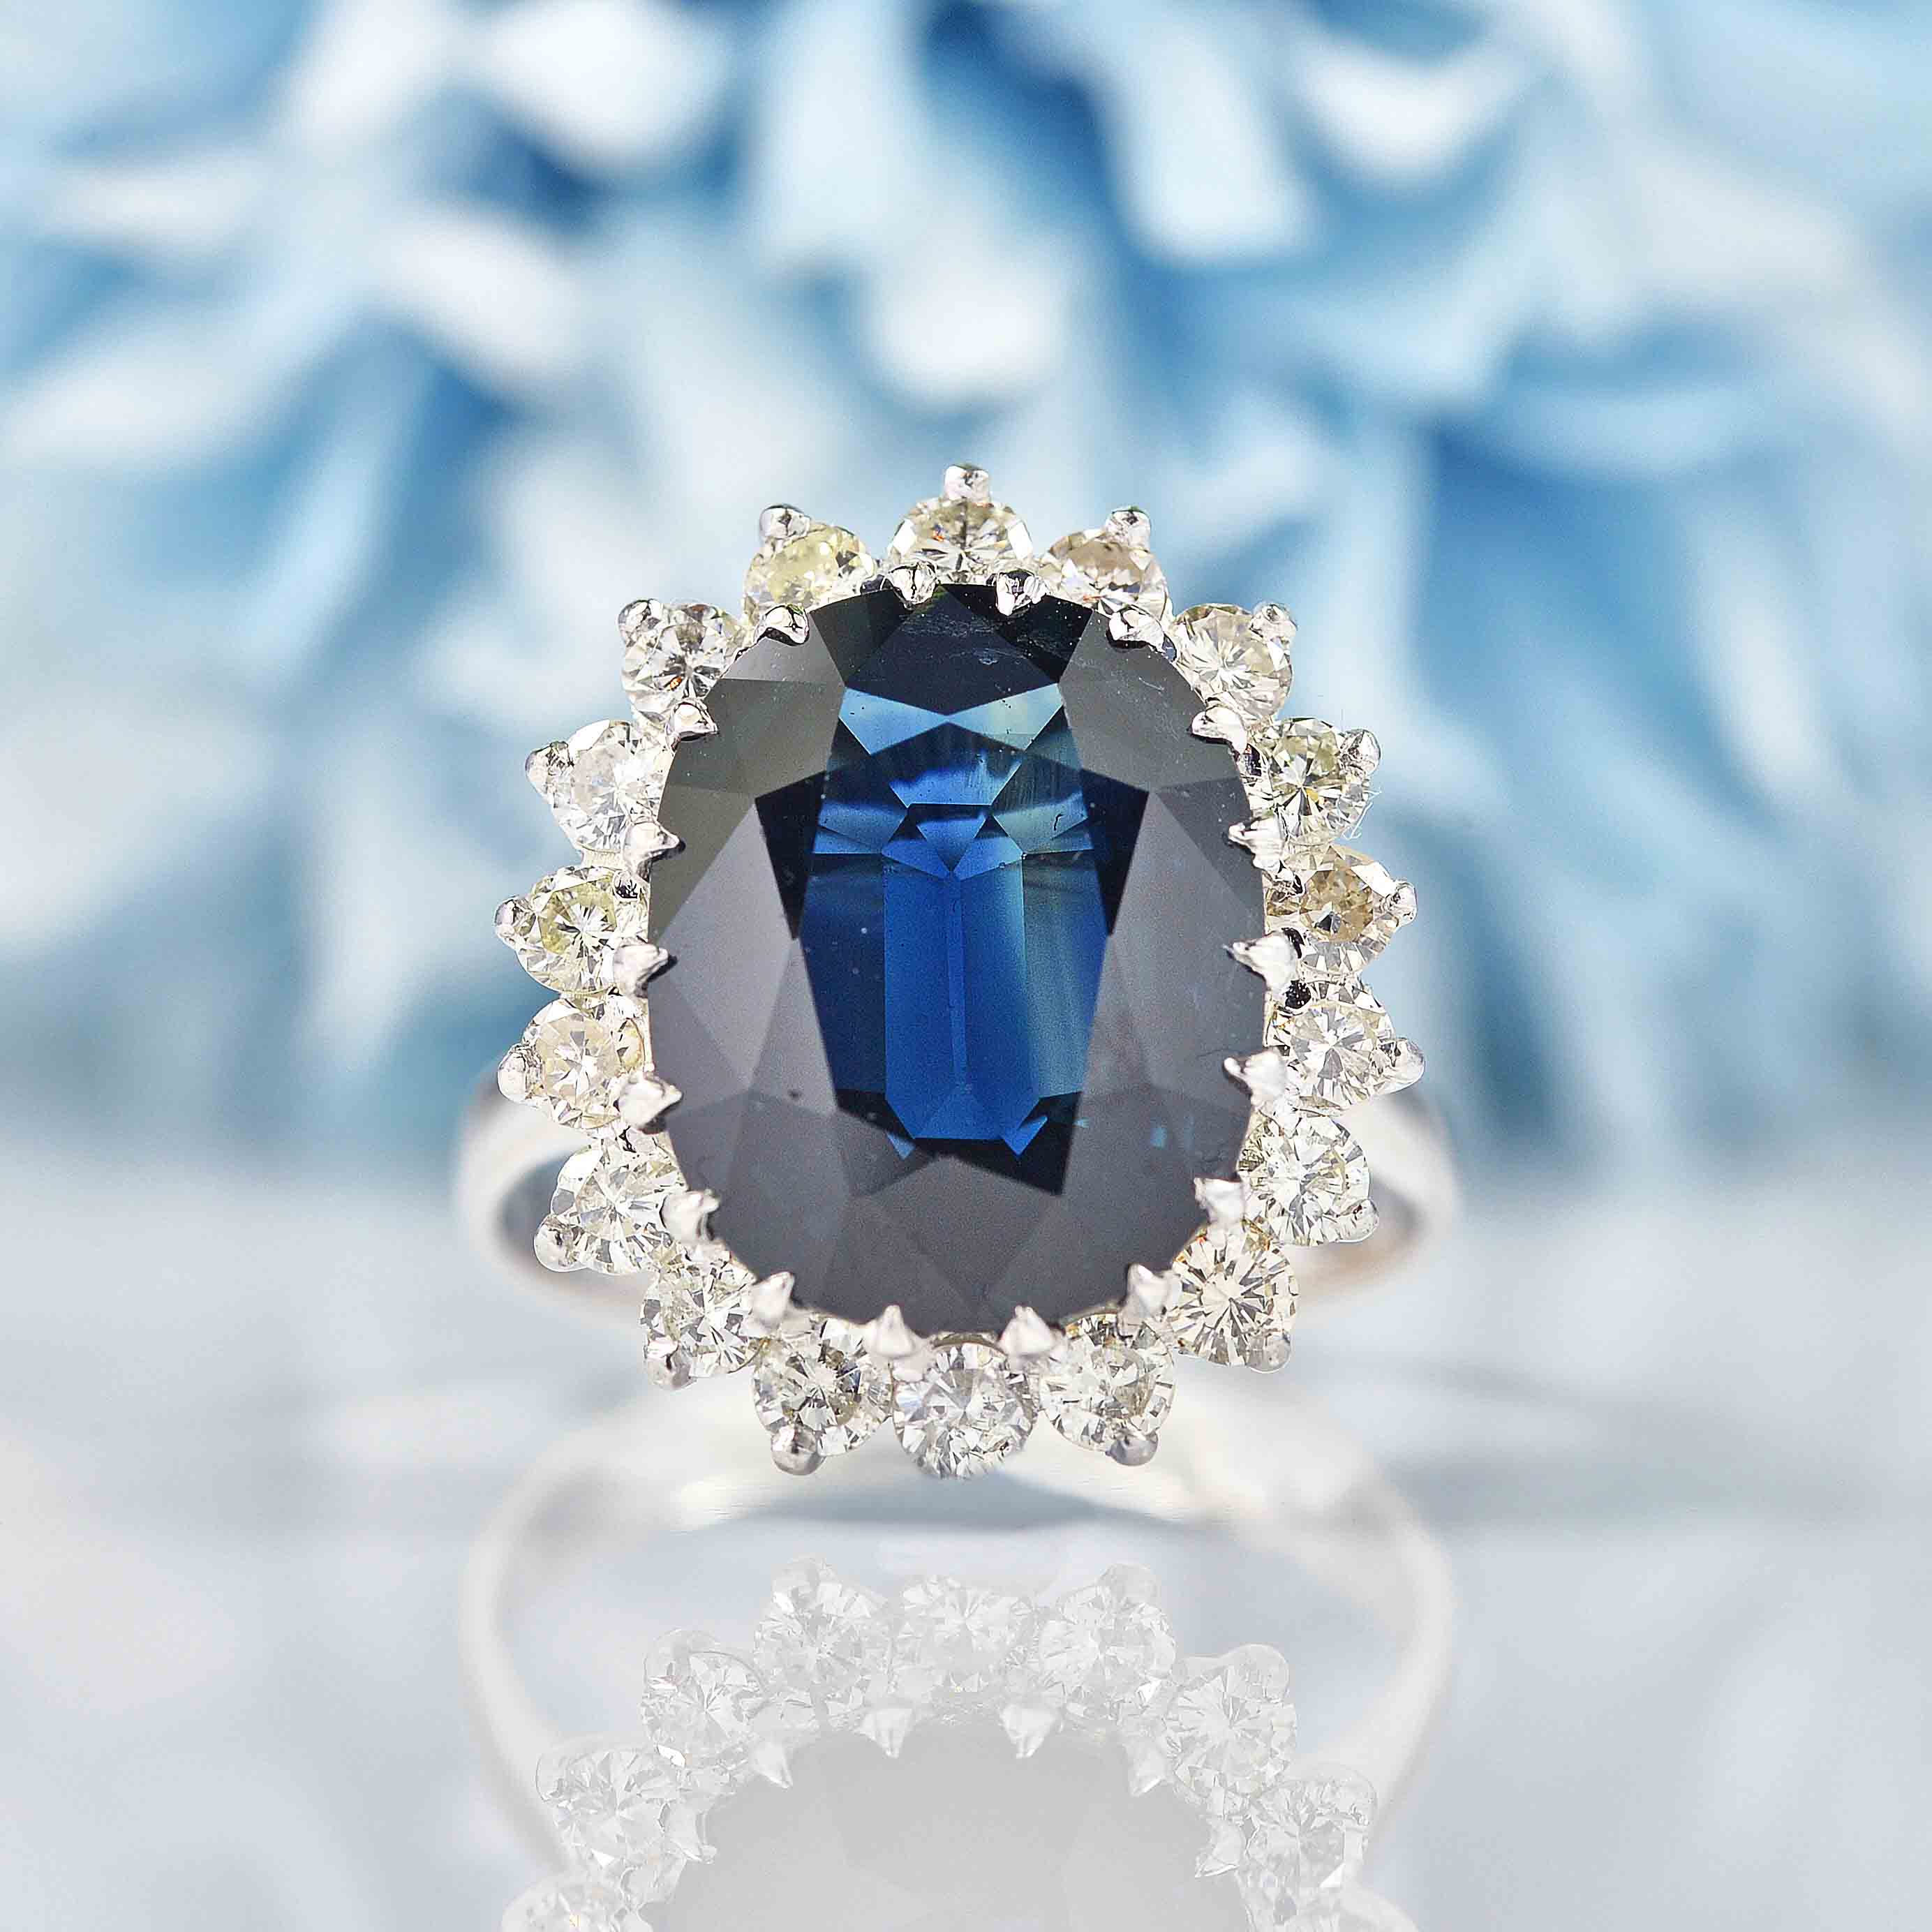 Ellibelle Jewellery Vintage 5.50-Carat Sapphire & Diamond White Gold Cluster Engagement Ring